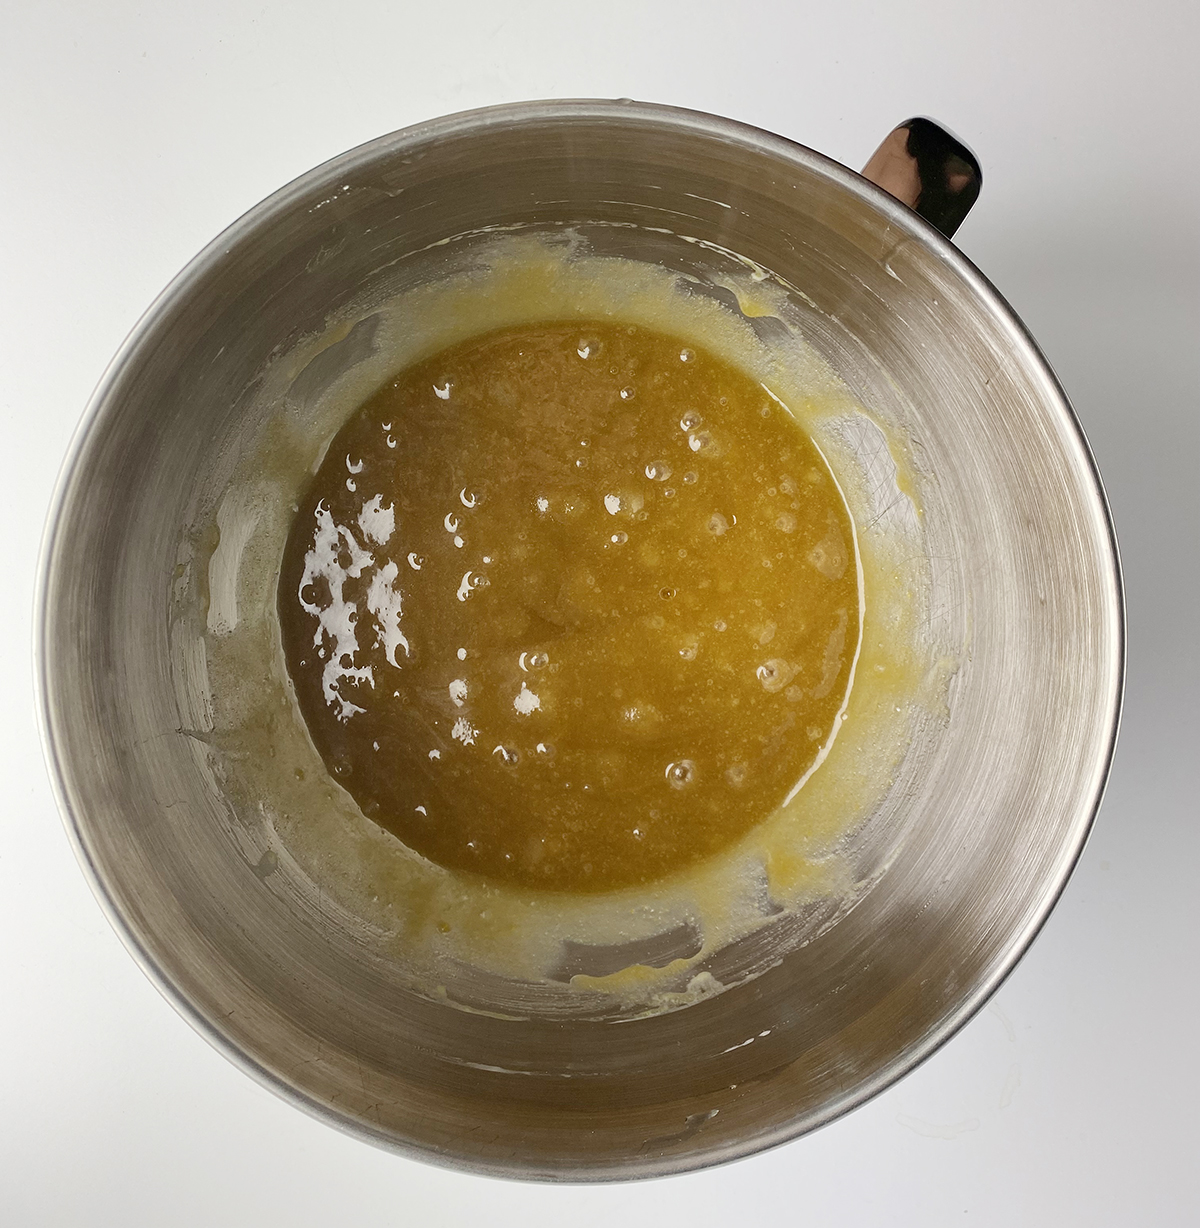 sugar mixture in bowl